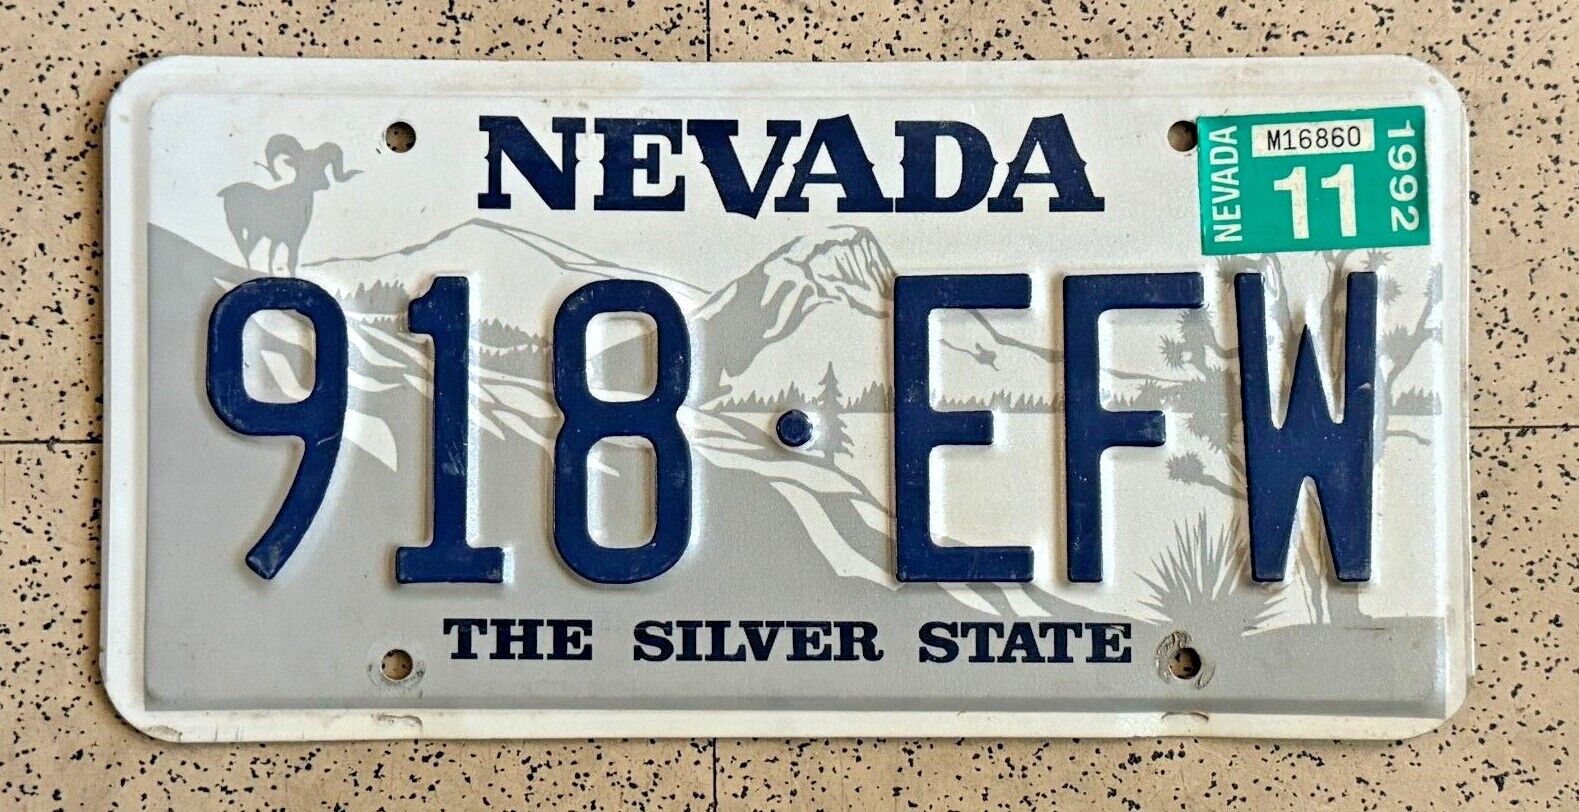 1985, 1992, 1993 NEVADA license plates – ORIGINAL vintage antique auto tags